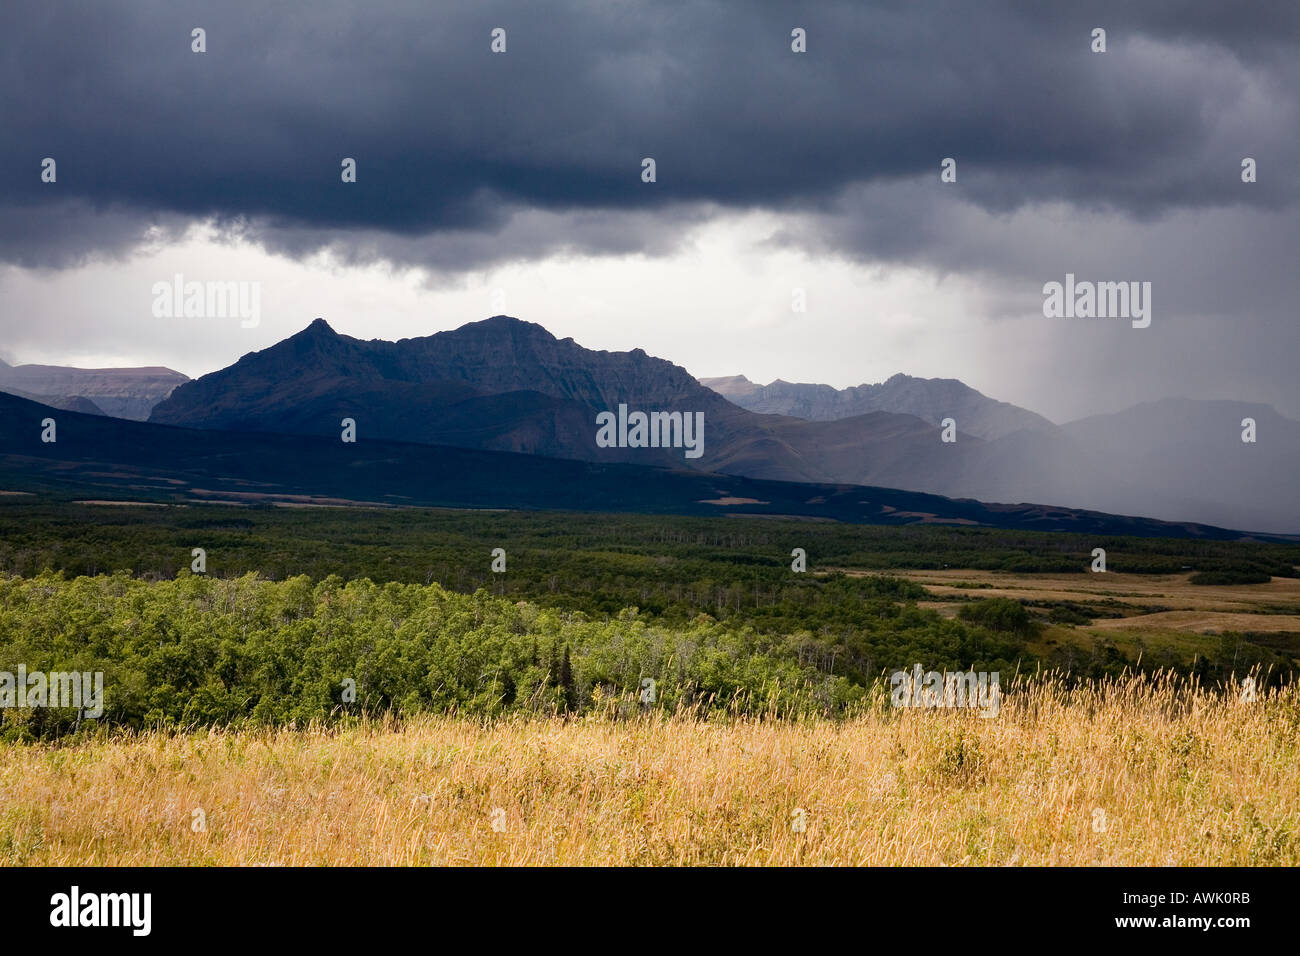 Regen Sturm über spreadeagle Berg in den kanadischen Rocky Mountains Alberta Kanada Stockfoto